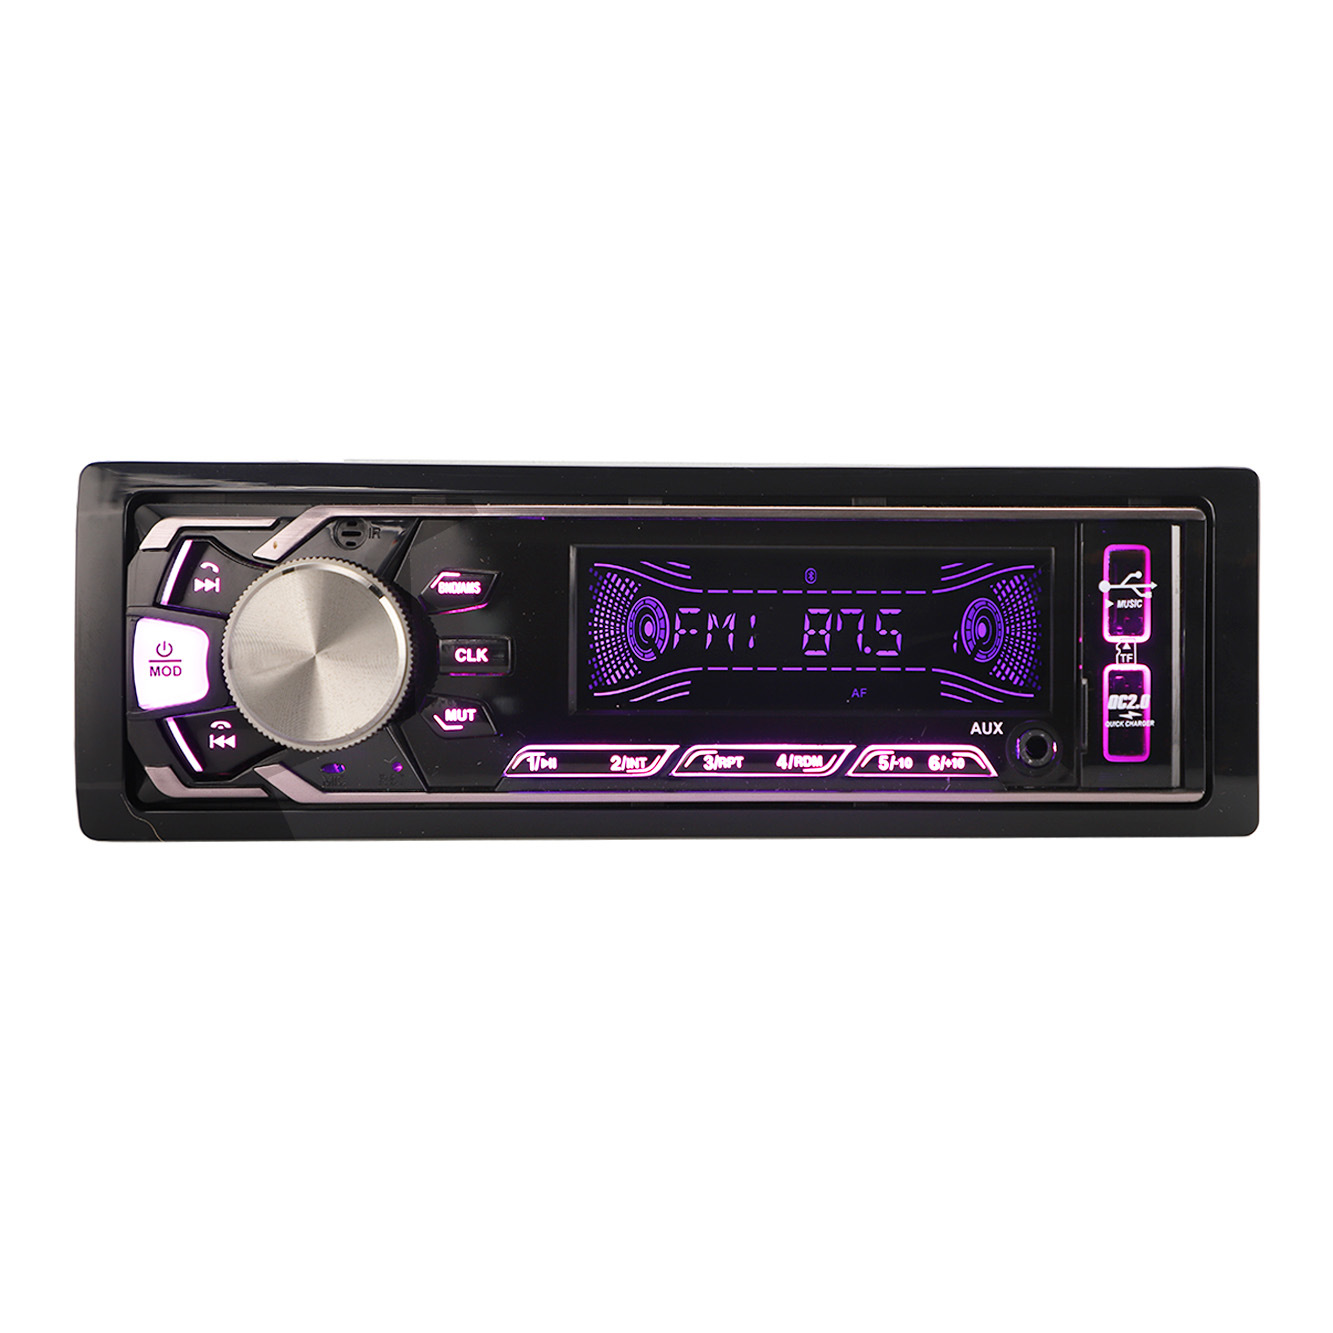 MP3-плеер Автомобильное зарядное устройство MP3-плеер Автомобильный MP3-плеер с фиксированной панелью на один стандарт DIN